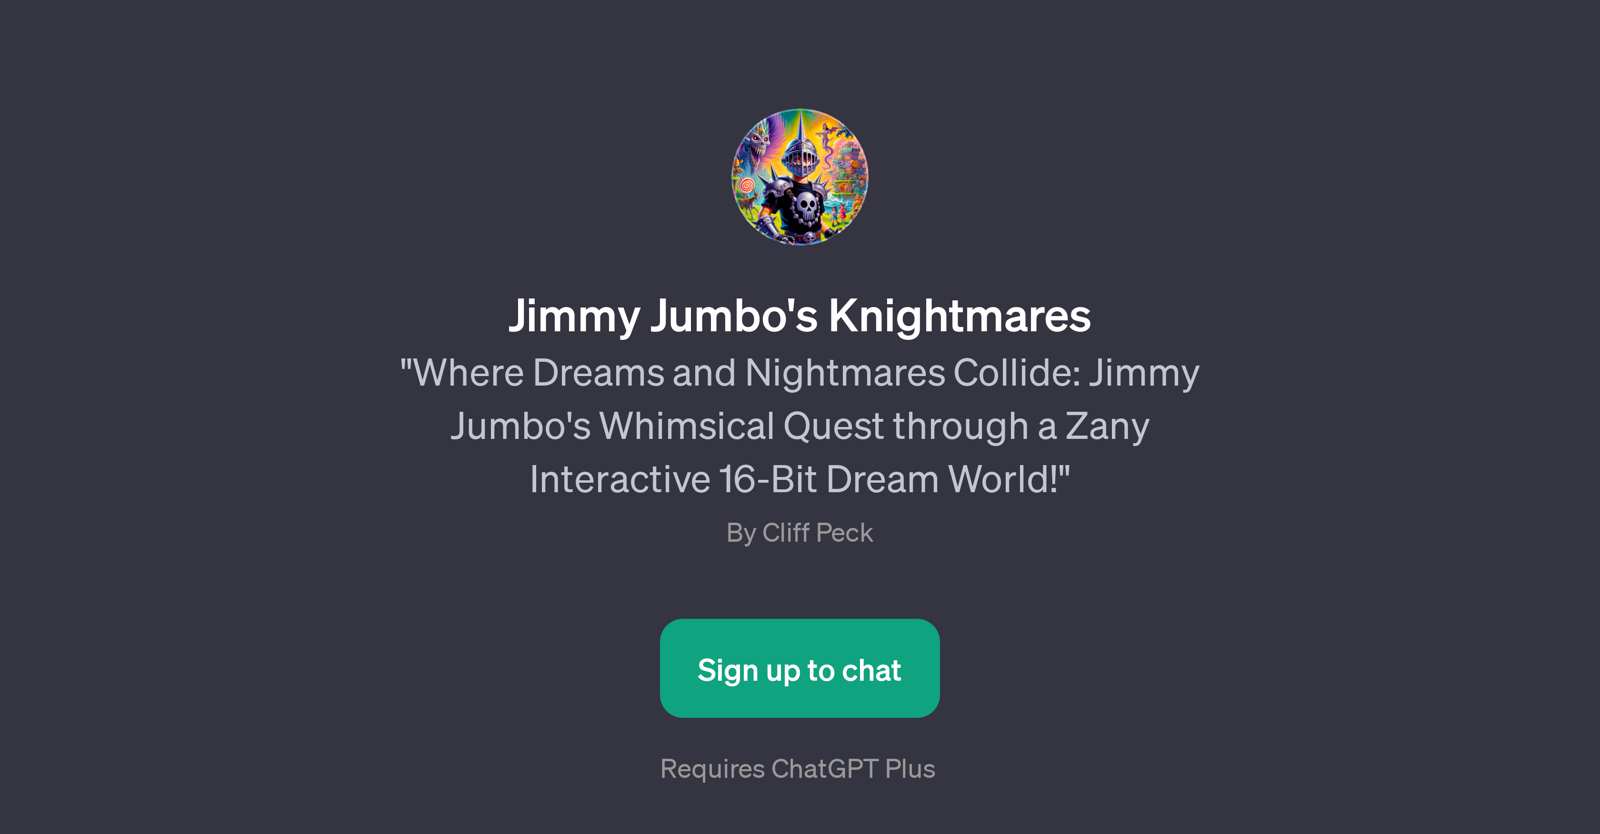 Jimmy Jumbo's Knightmares website